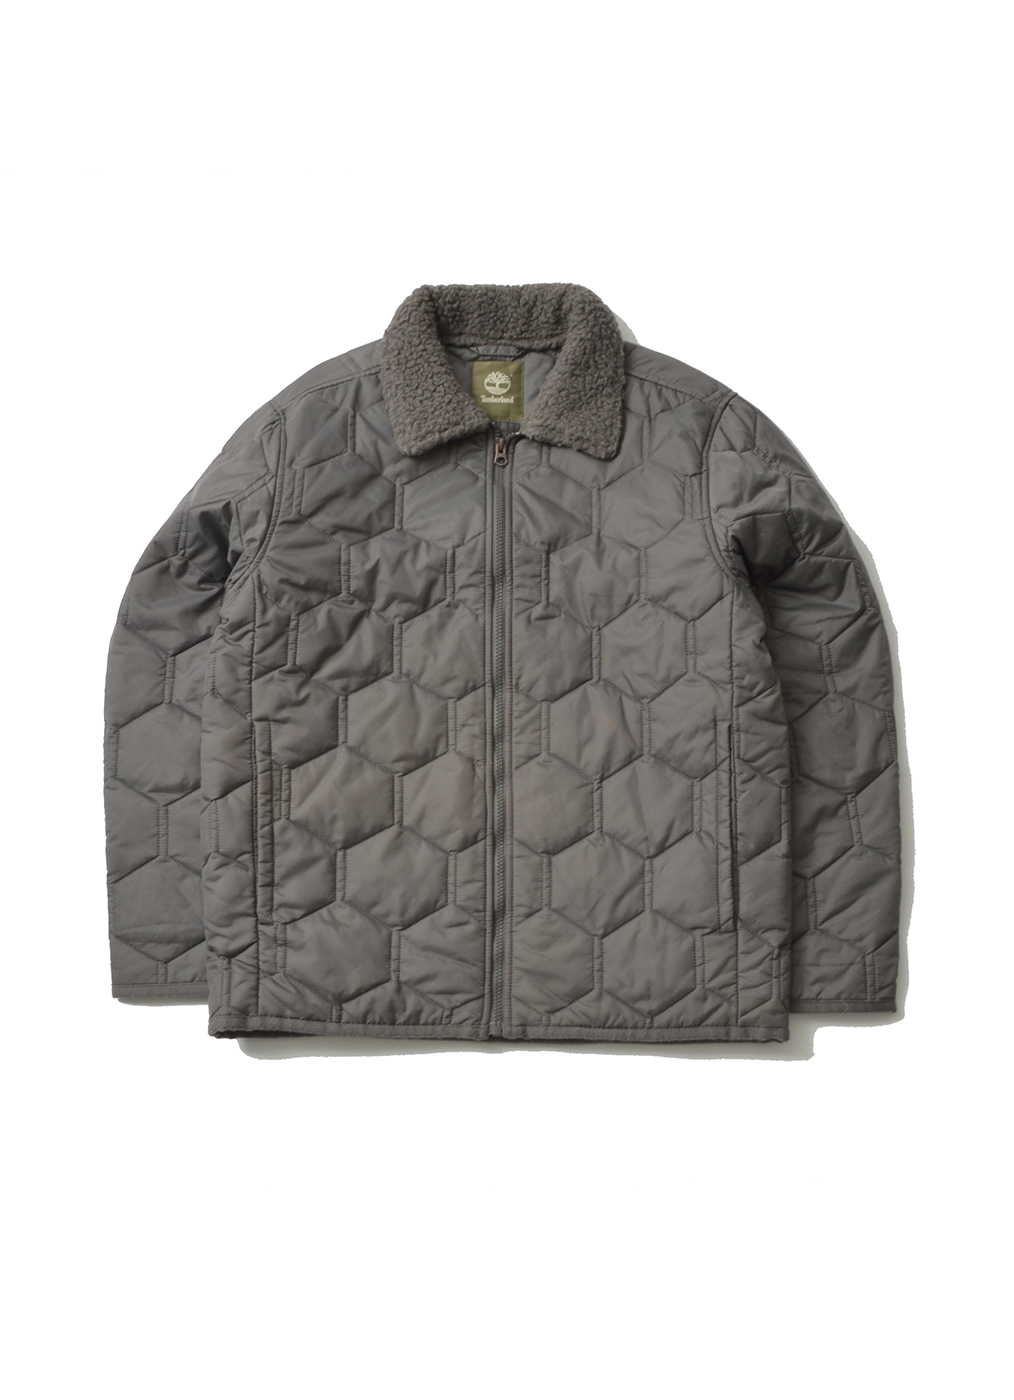 Timberland 100% nylonshell jacket